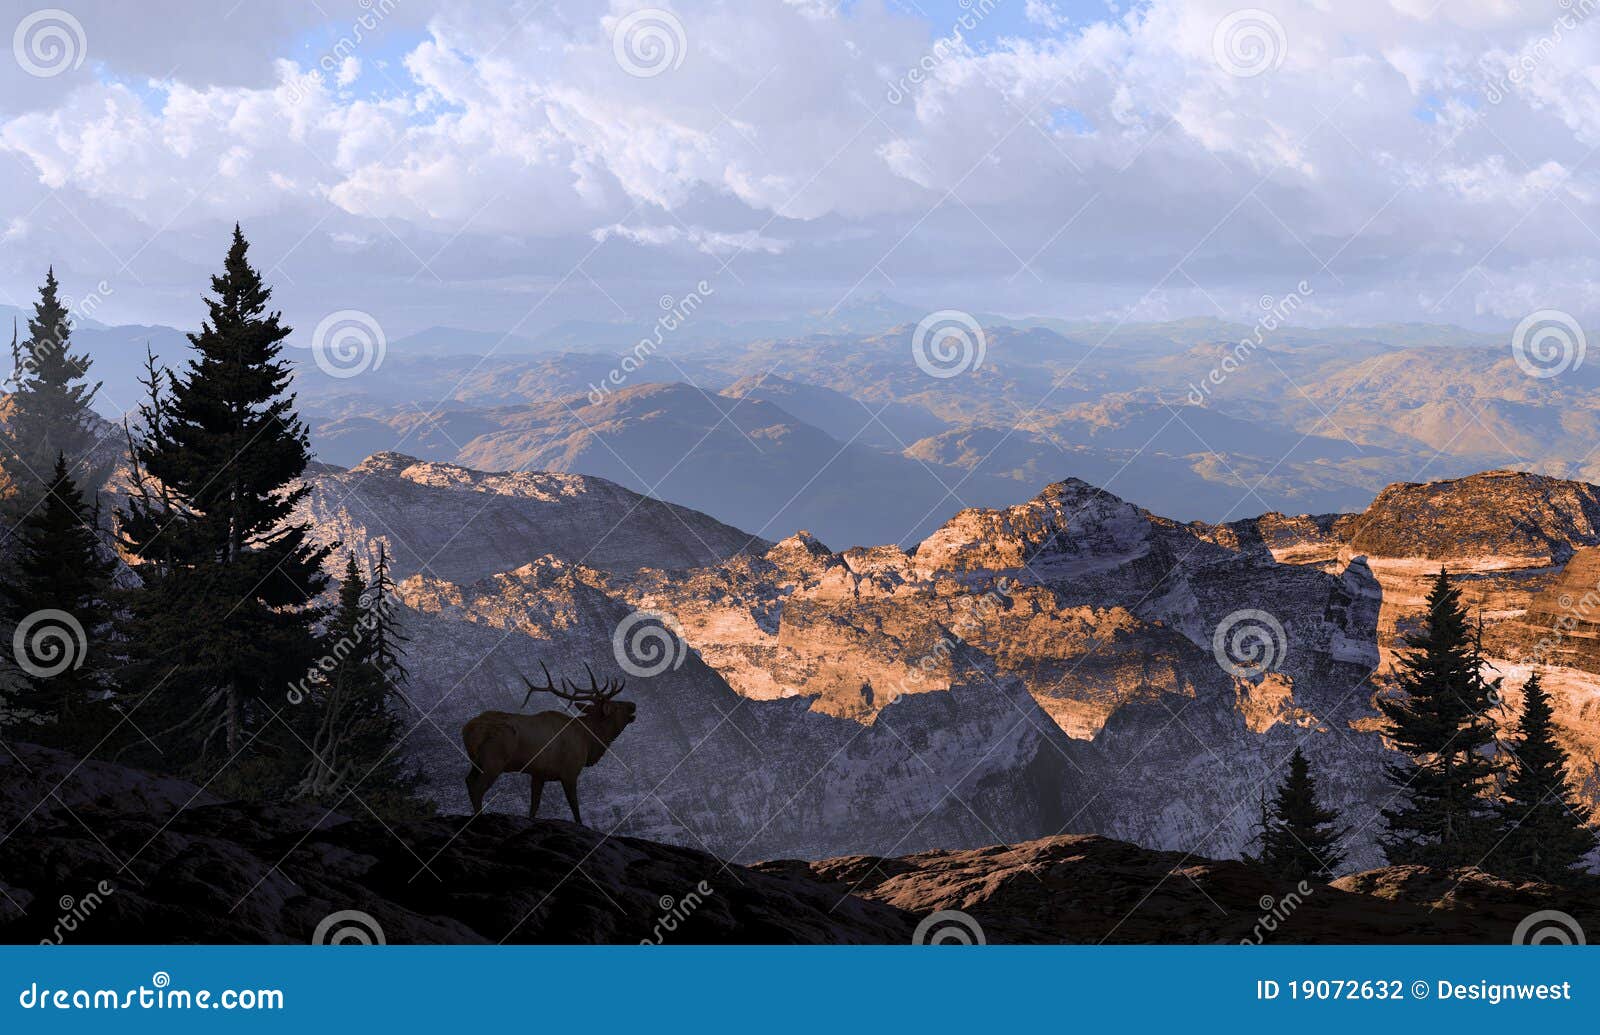 elk lookout silhouette